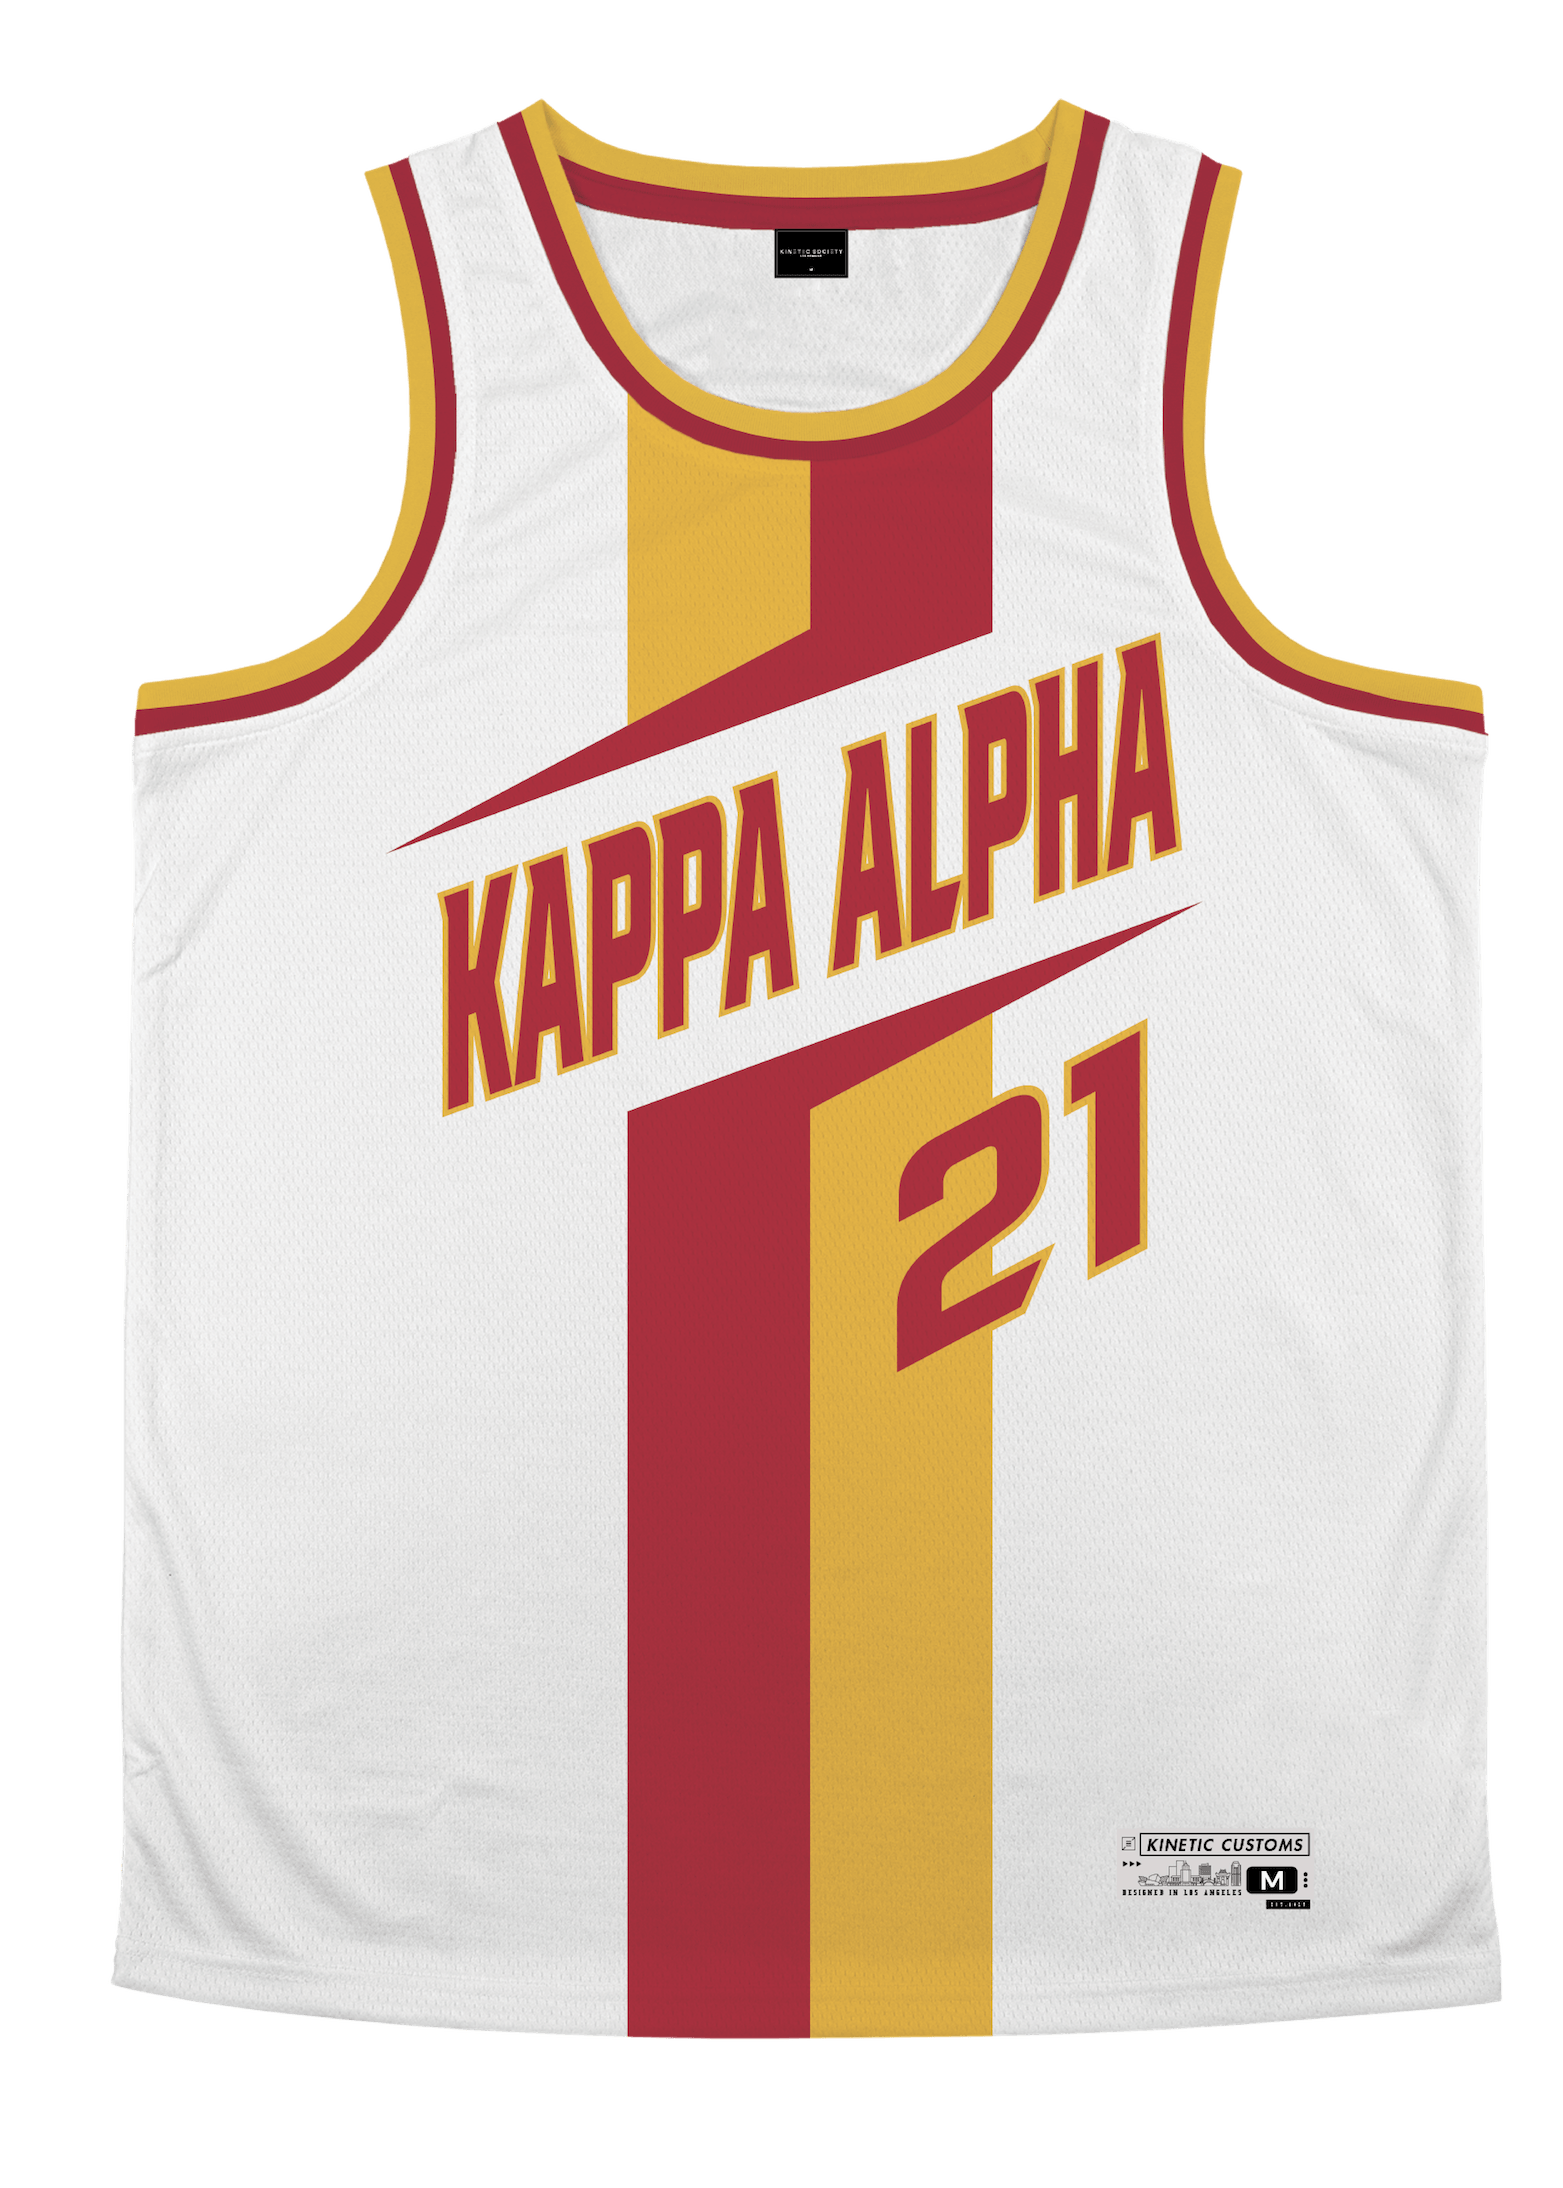 Kappa Alpha Order - Middle Child Basketball Jersey Premium Basketball Kinetic Society LLC 